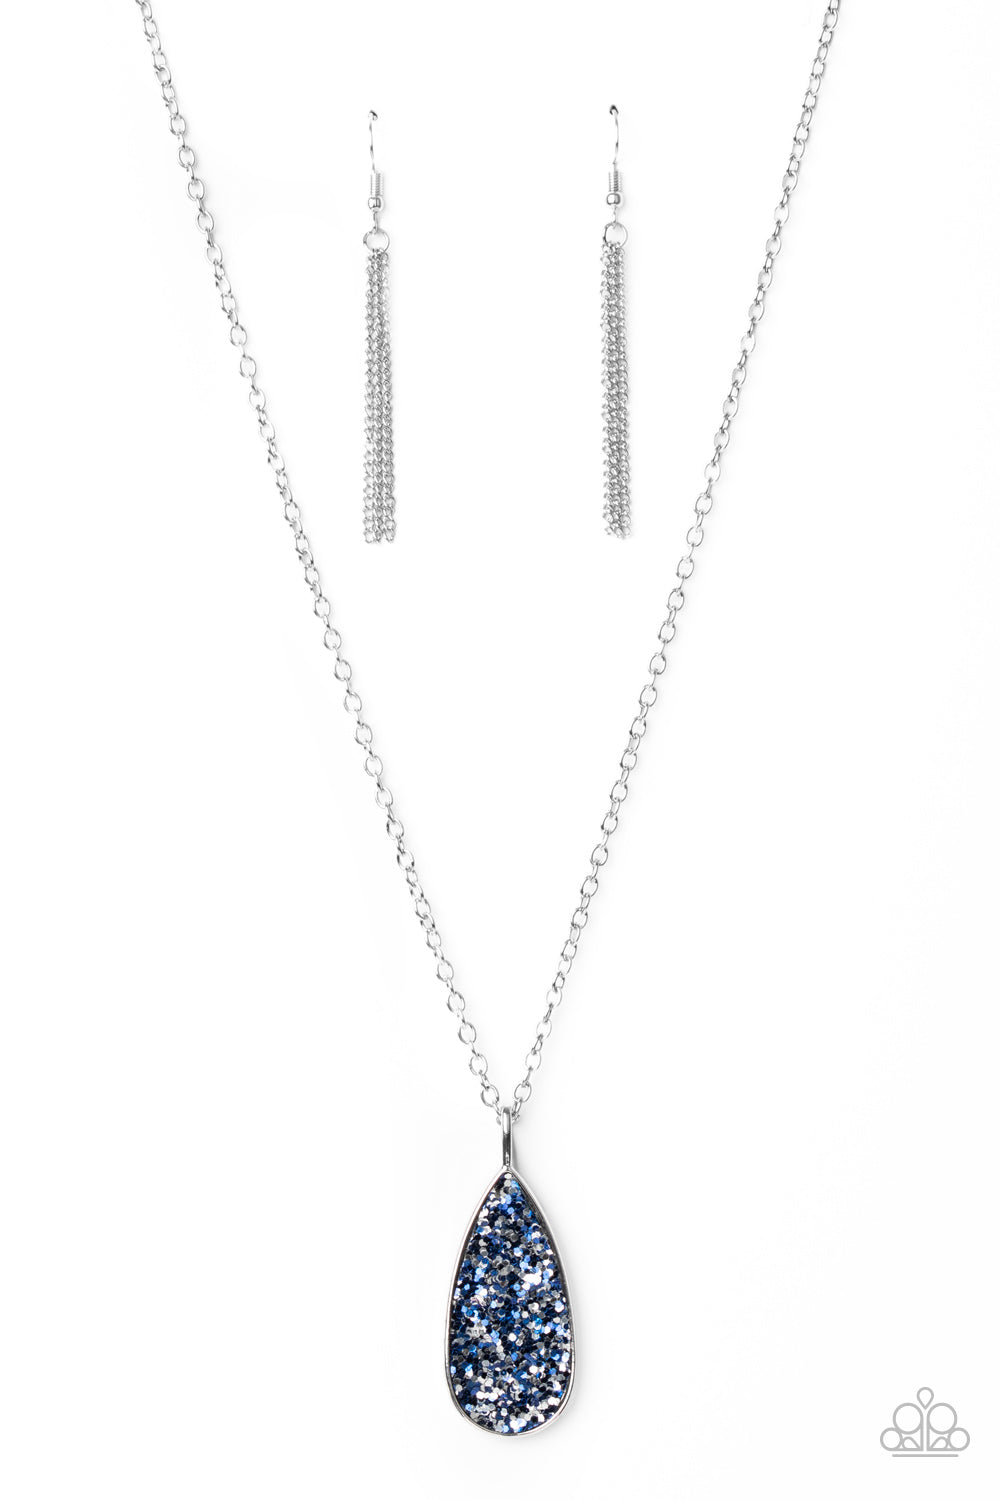 Daily Dose of Sparkle - Paparazzi - Blue Glitter Teardrop Pendant Necklace